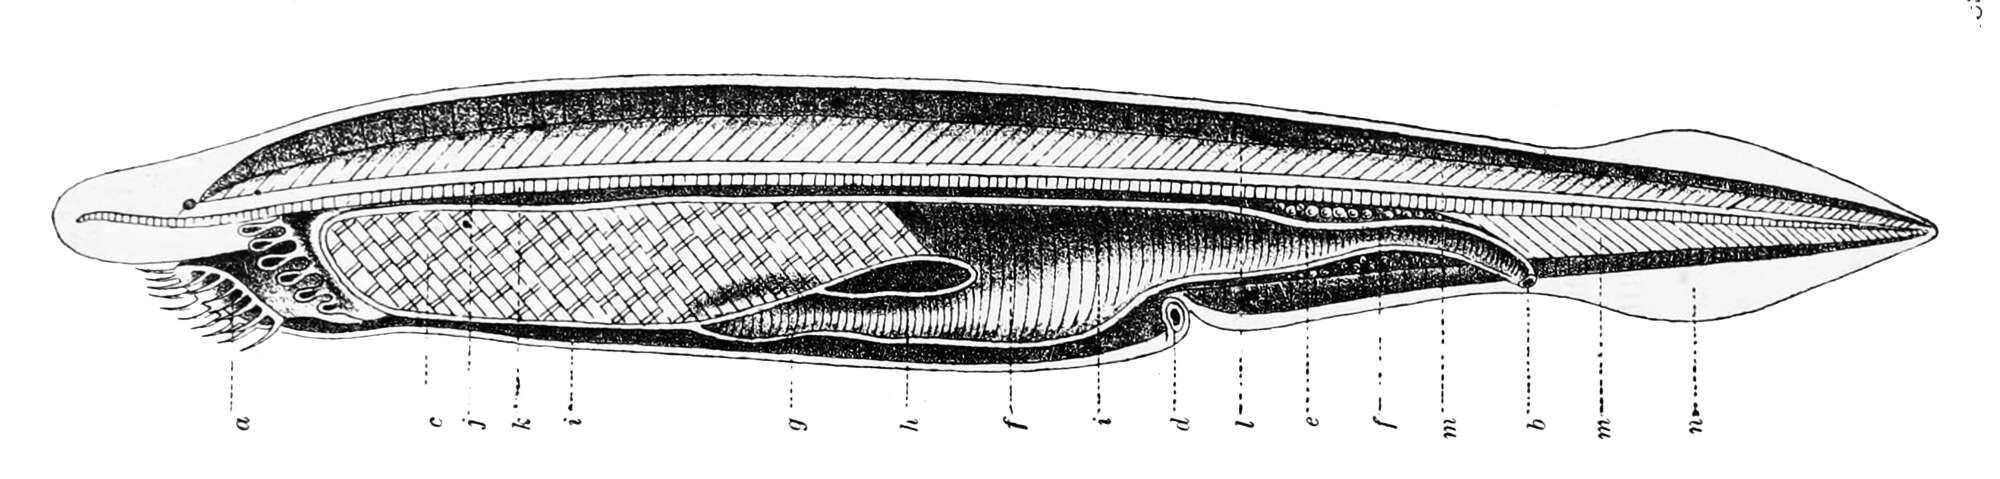 Image of amphioxus, lancelet